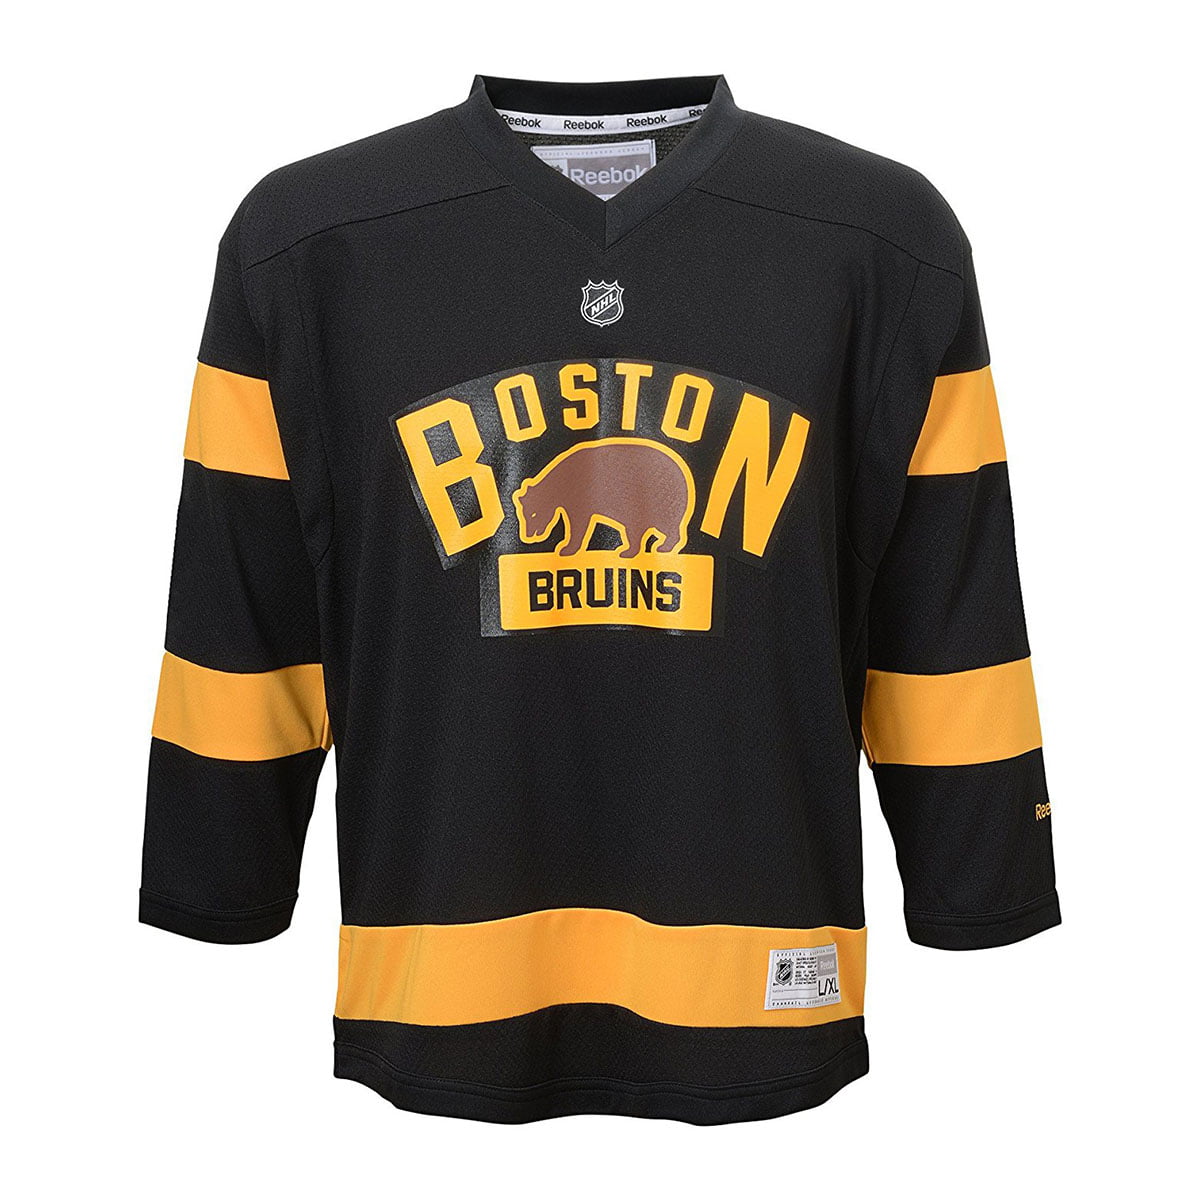 buy boston bruins winter classic jersey